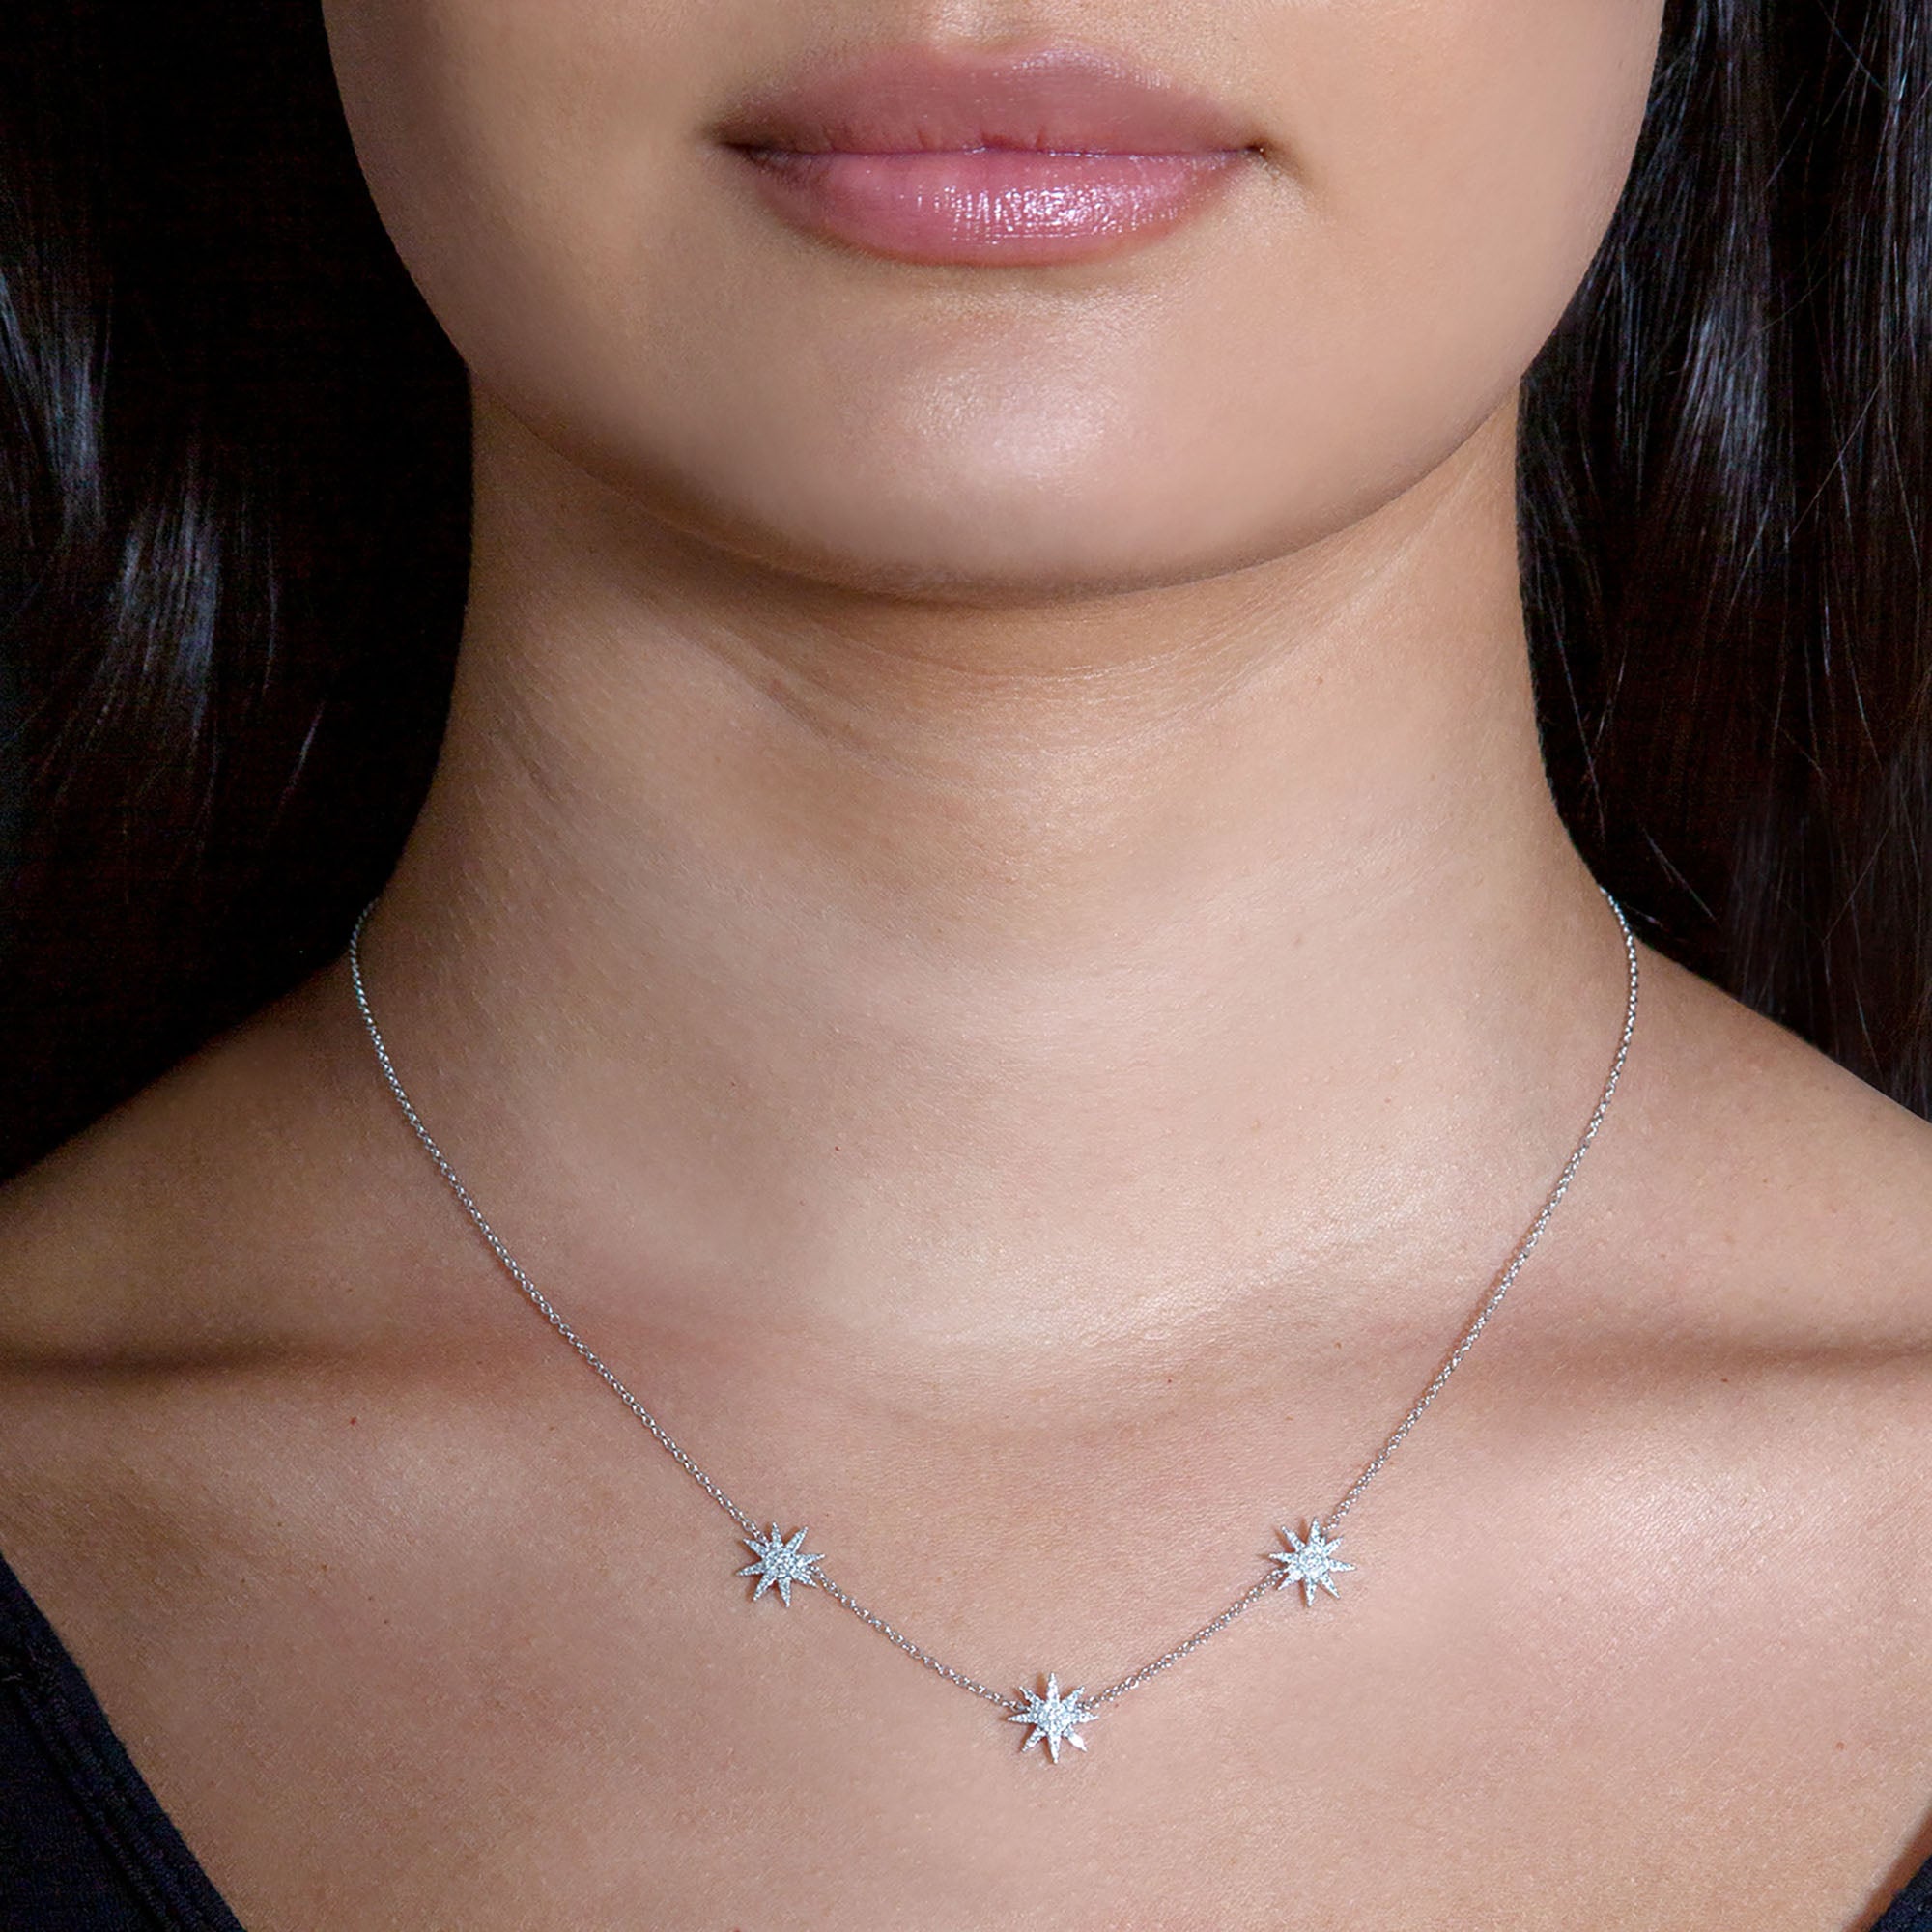 Three Star Pave Set 0.20 ctw Diamond Necklace Pendant-in 14K/18K White, Yellow, Rose Gold and Platinum - Christmas Jewelry Gift -VIRABYANI